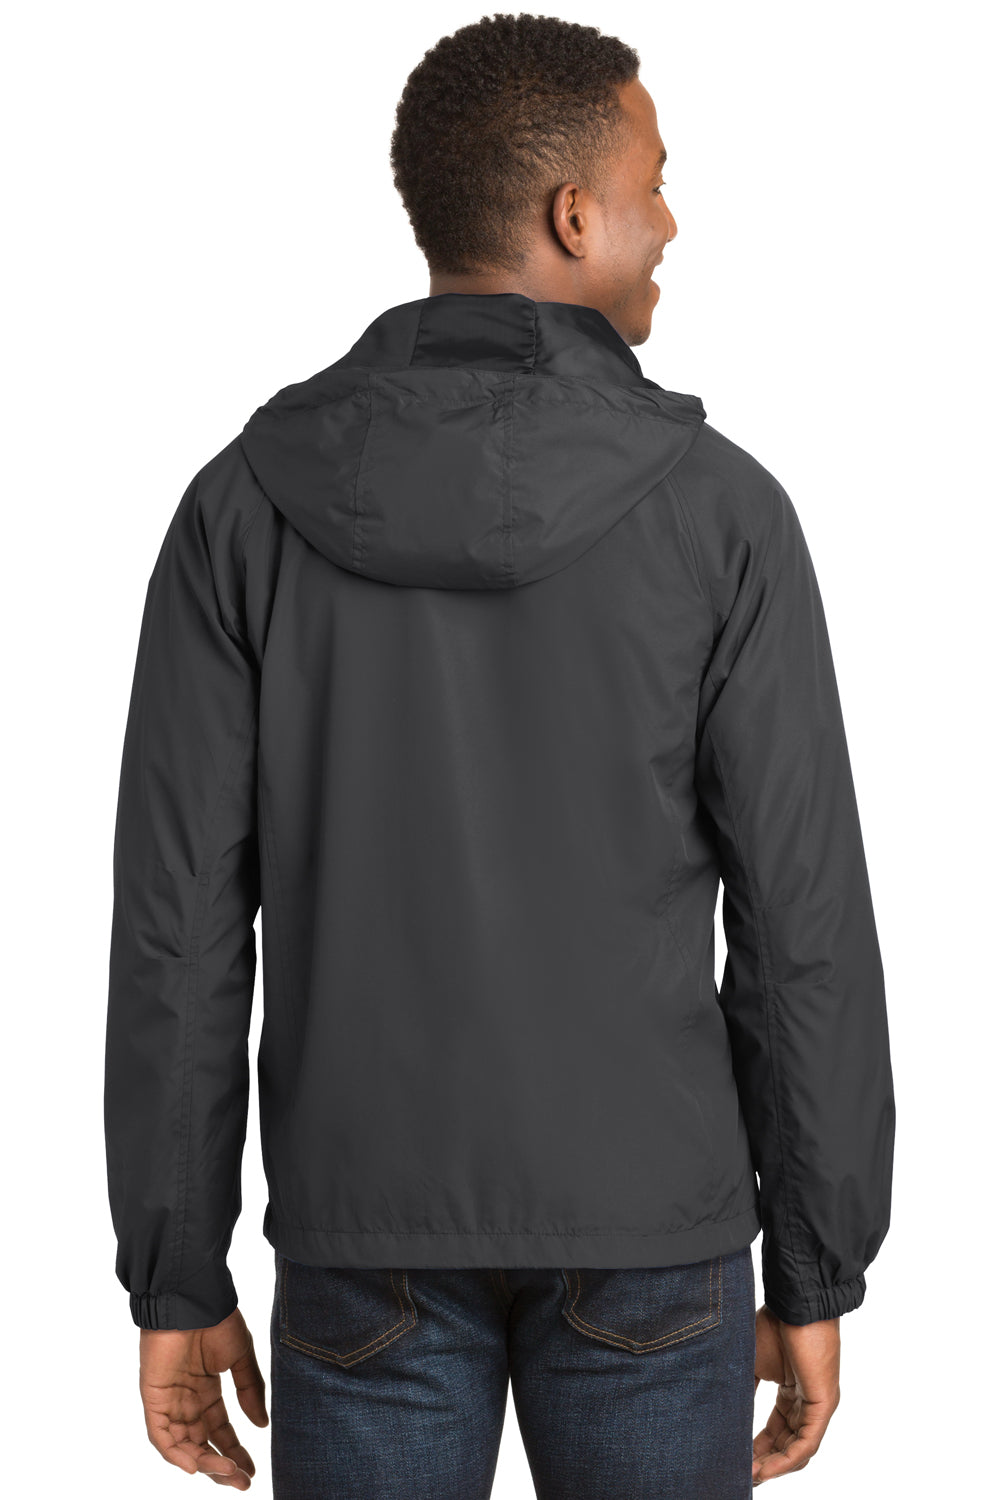 Sport-Tek JST73 Mens Water Resistant Full Zip Hooded Jacket Graphite Grey Back